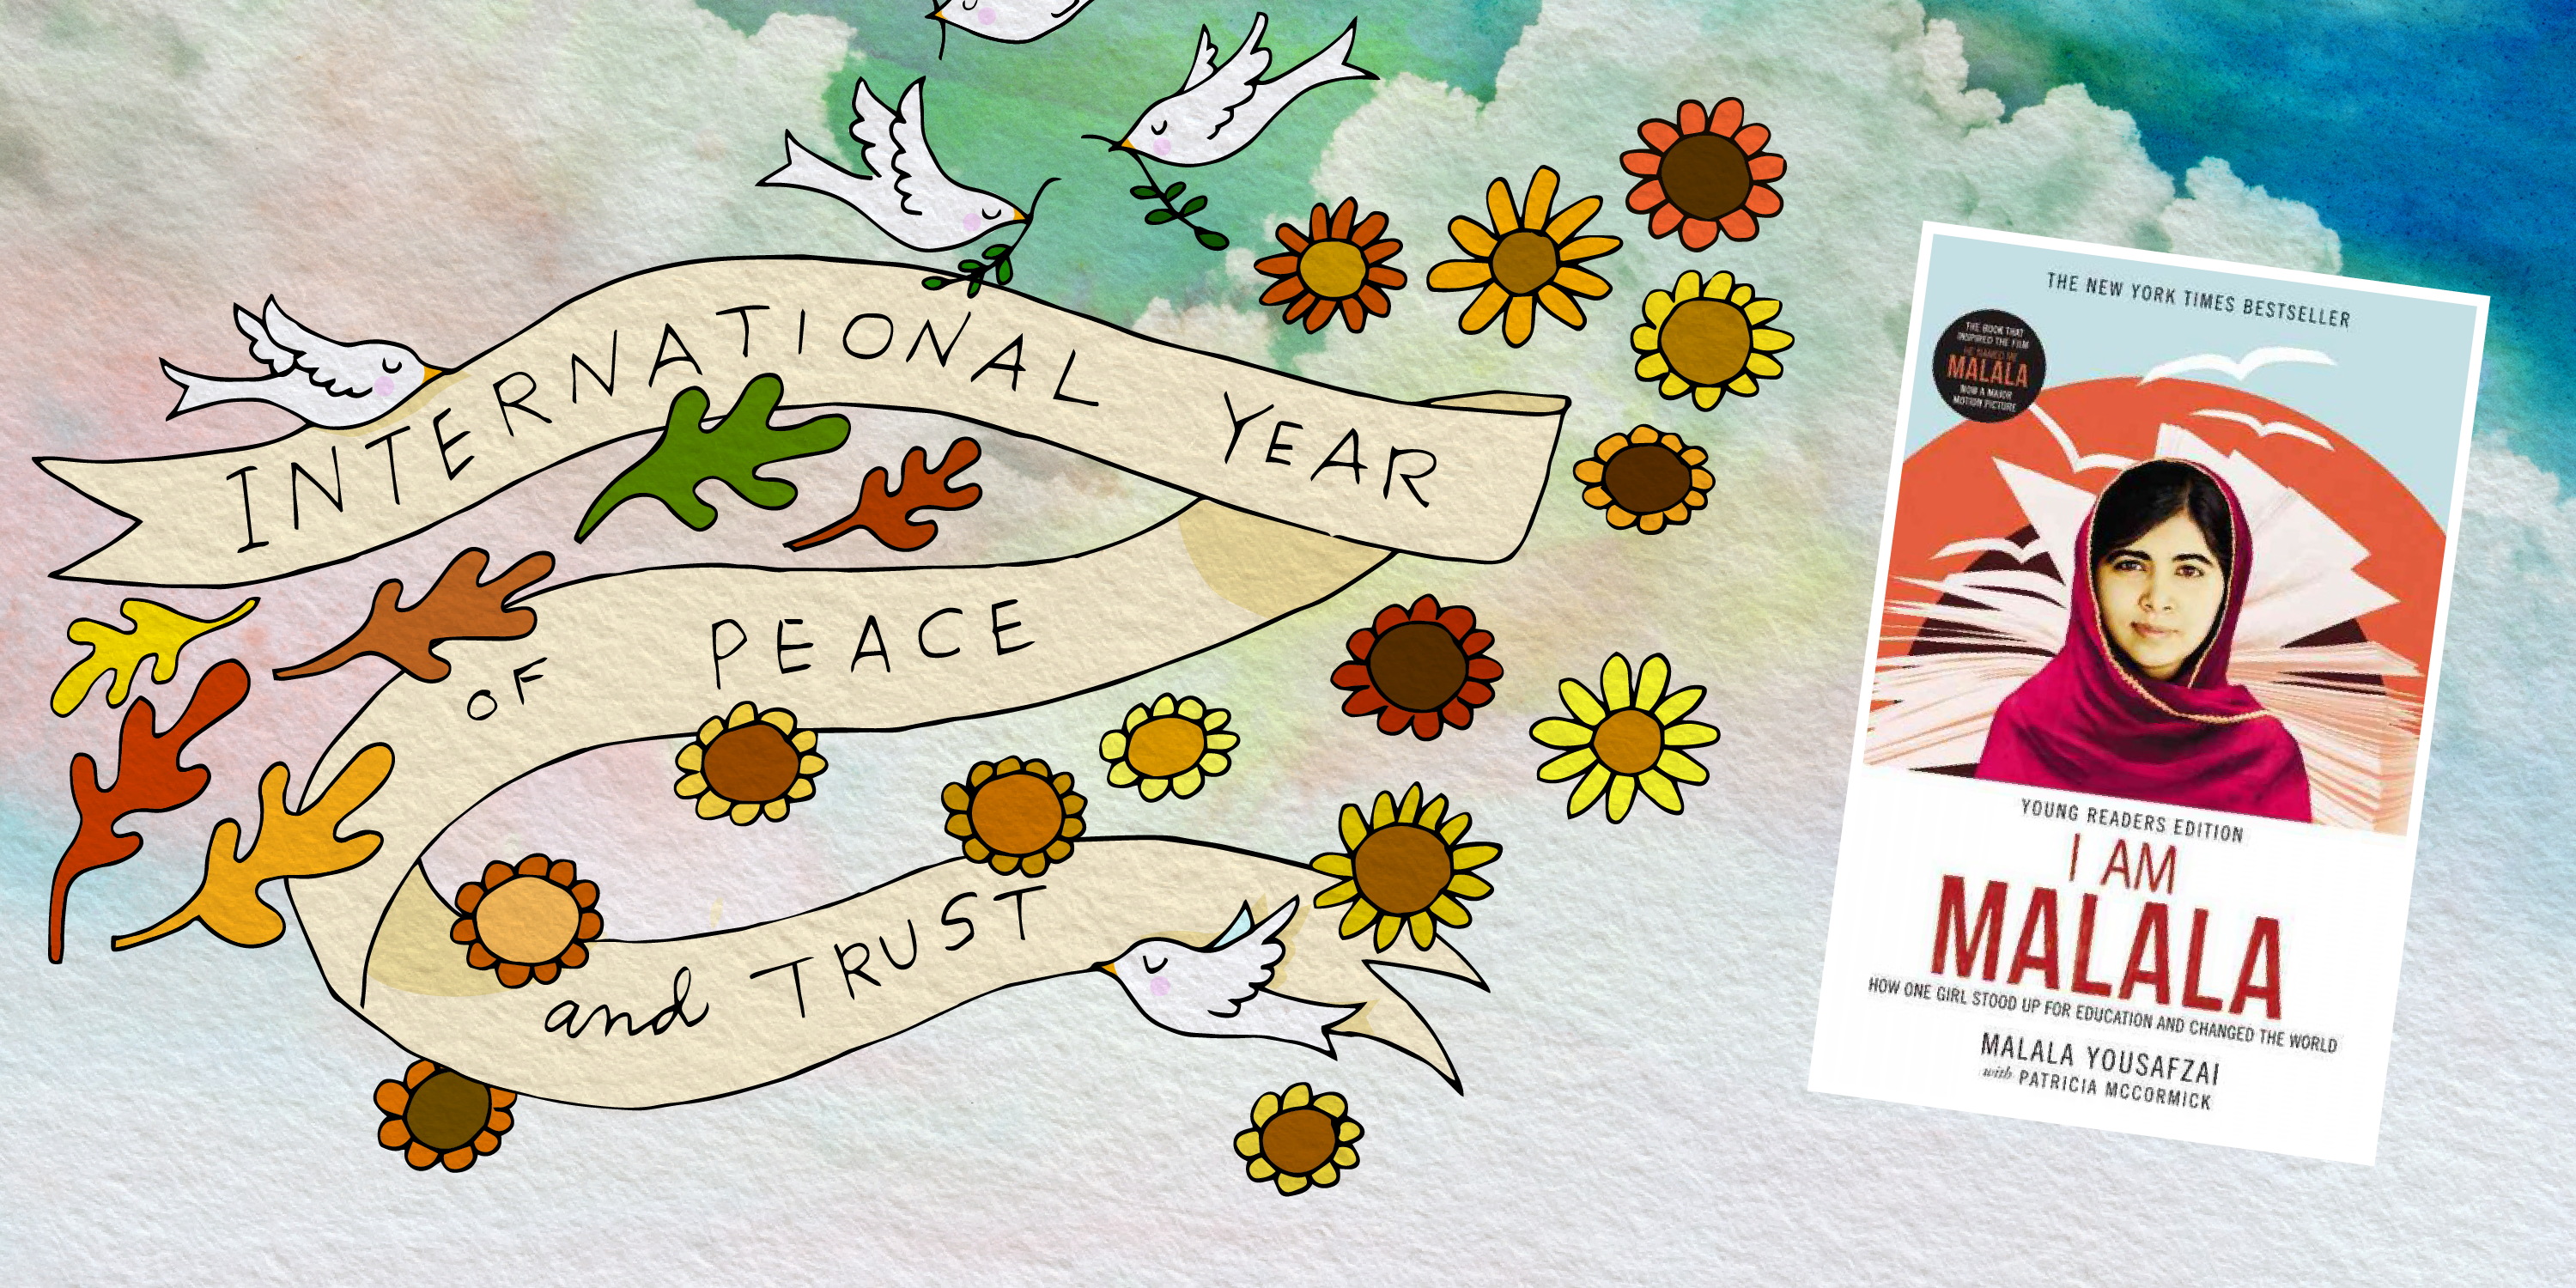 International Year of Peace and Trust: I Am Malala